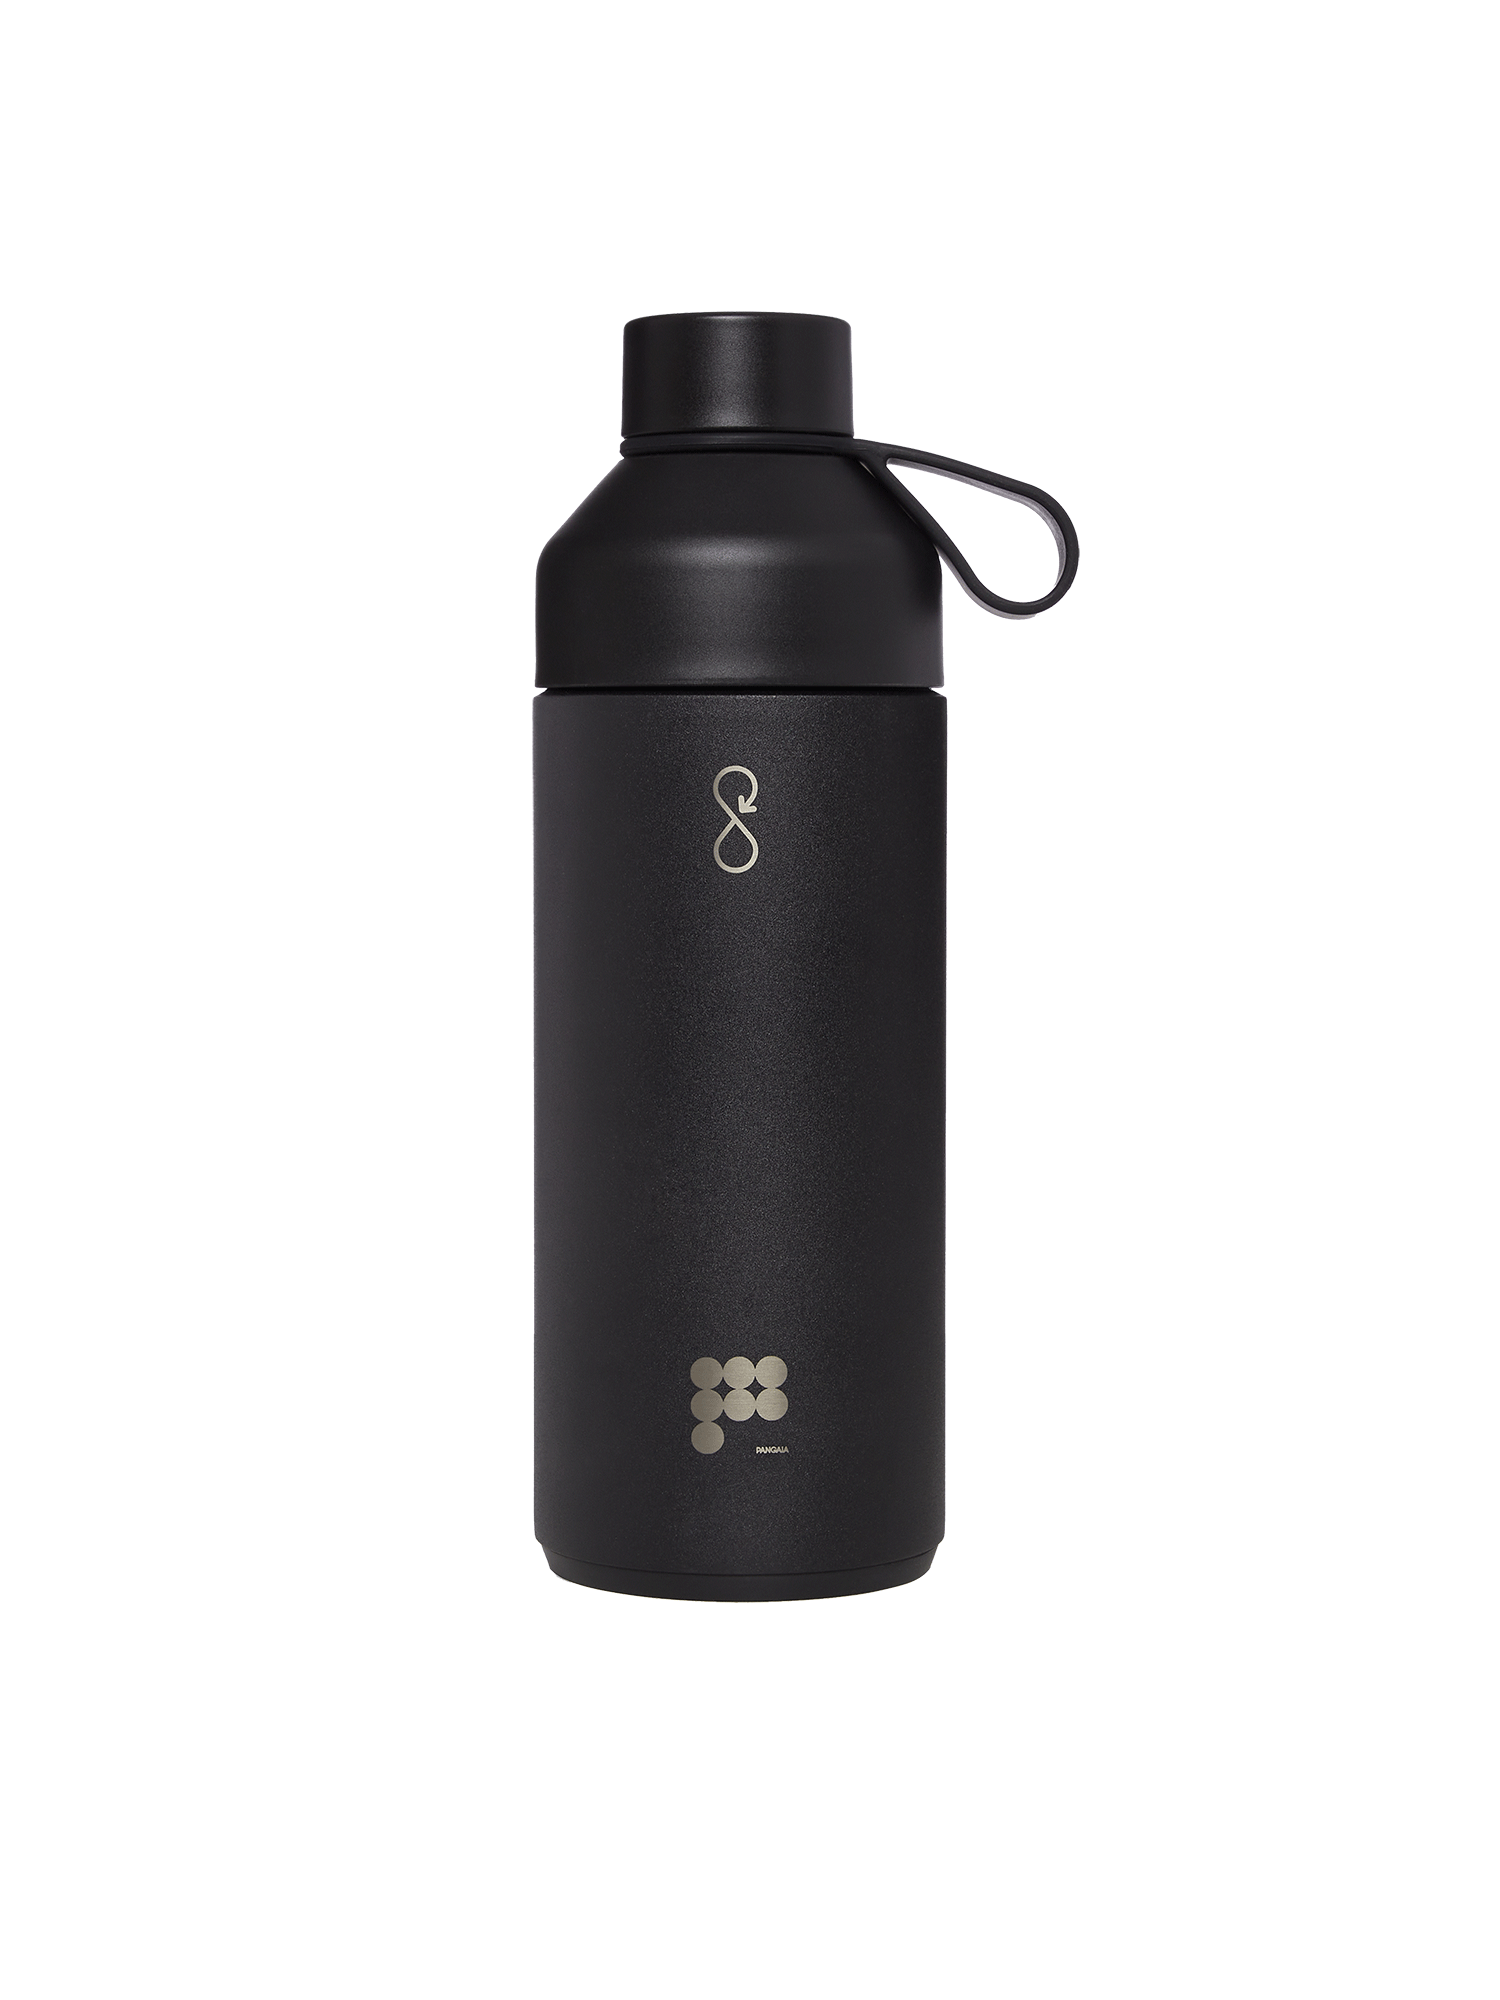 Pangaia Ocean Bottle - 1 Litre—black packshot-3